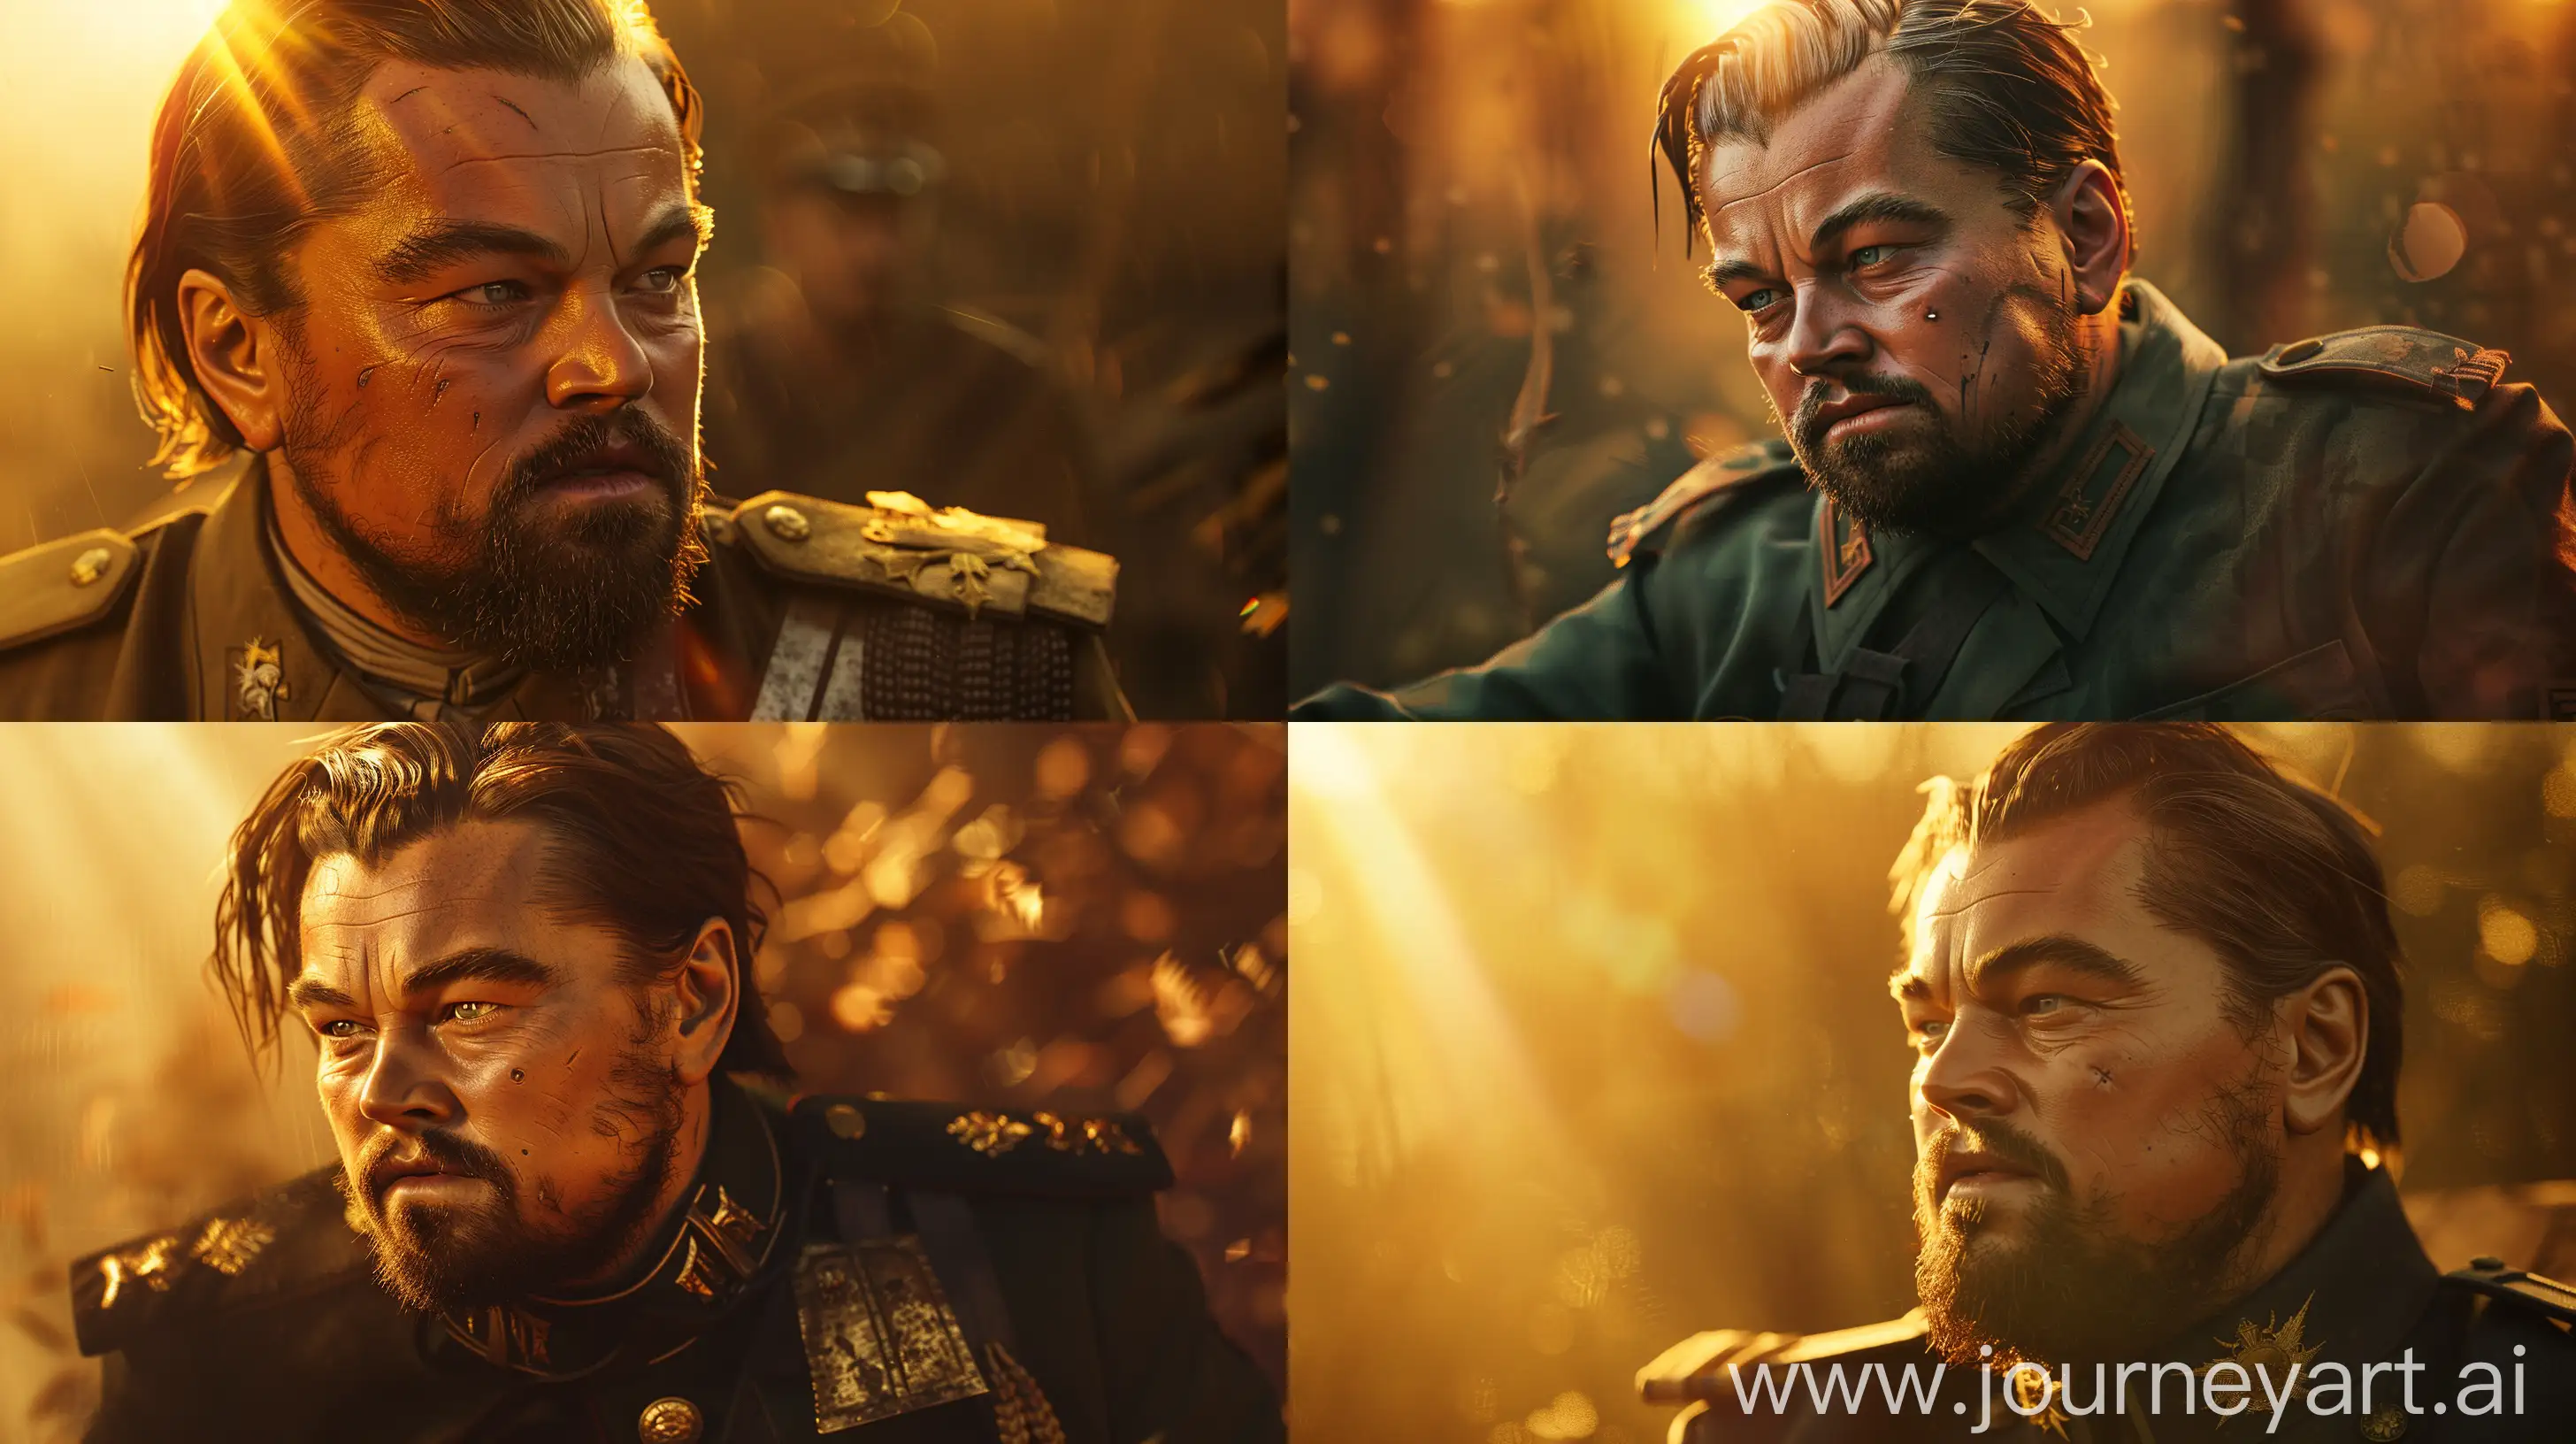 Creepy-Military-Portrait-Leonard-DiCaprio-in-Uniform-with-Medium-Hair-and-Beard